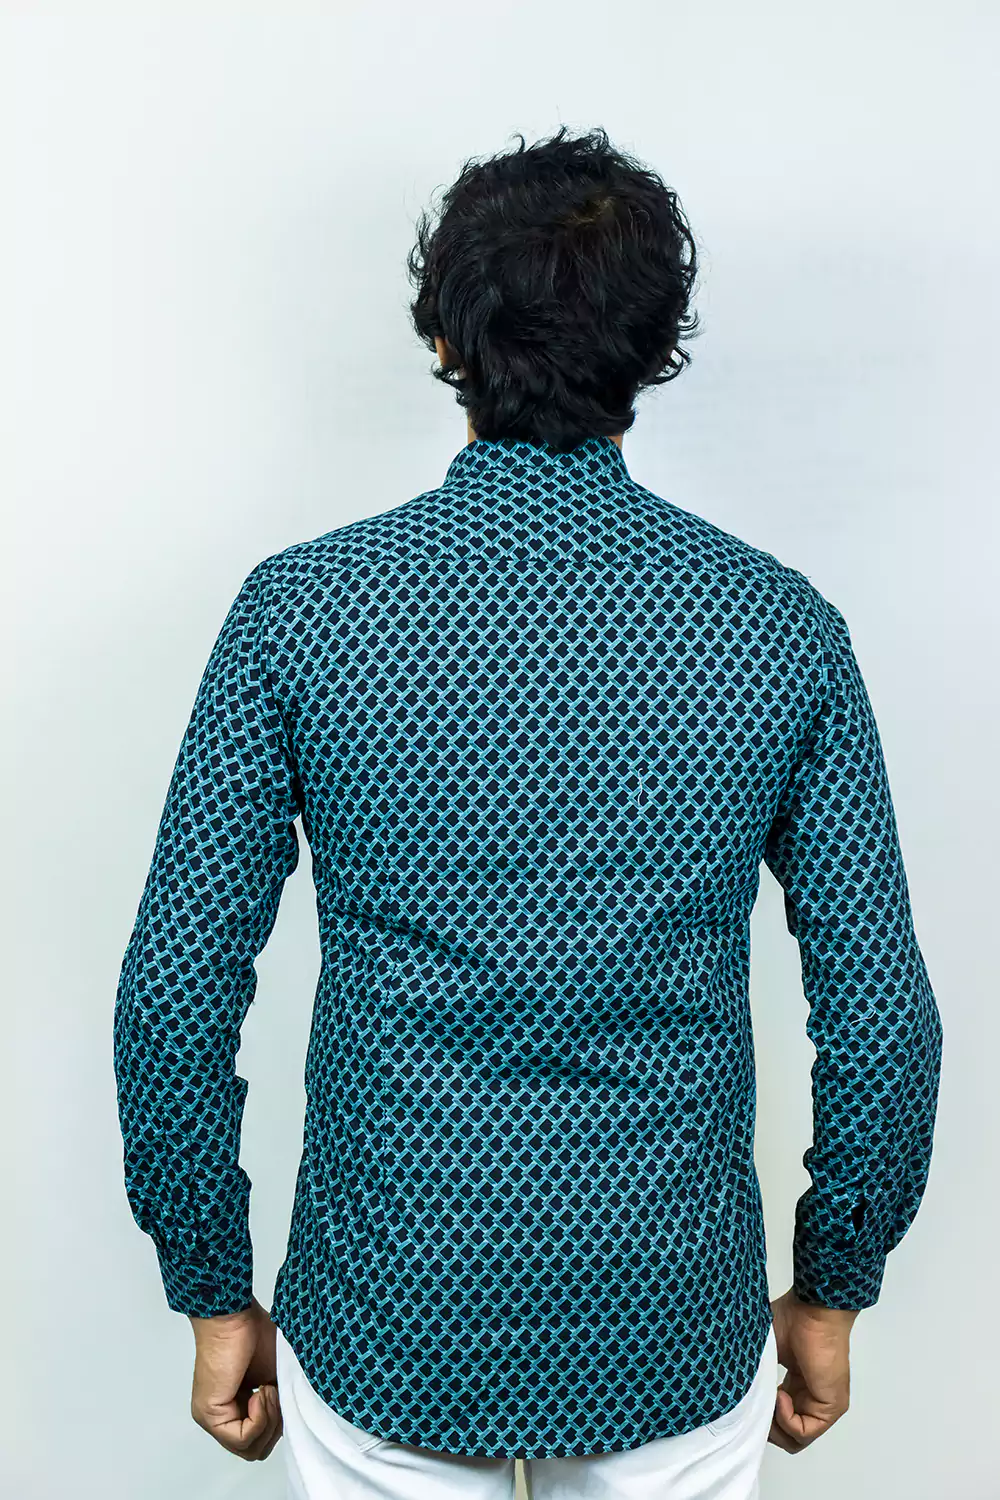 Teal Blue Geometric Patterned Shirt